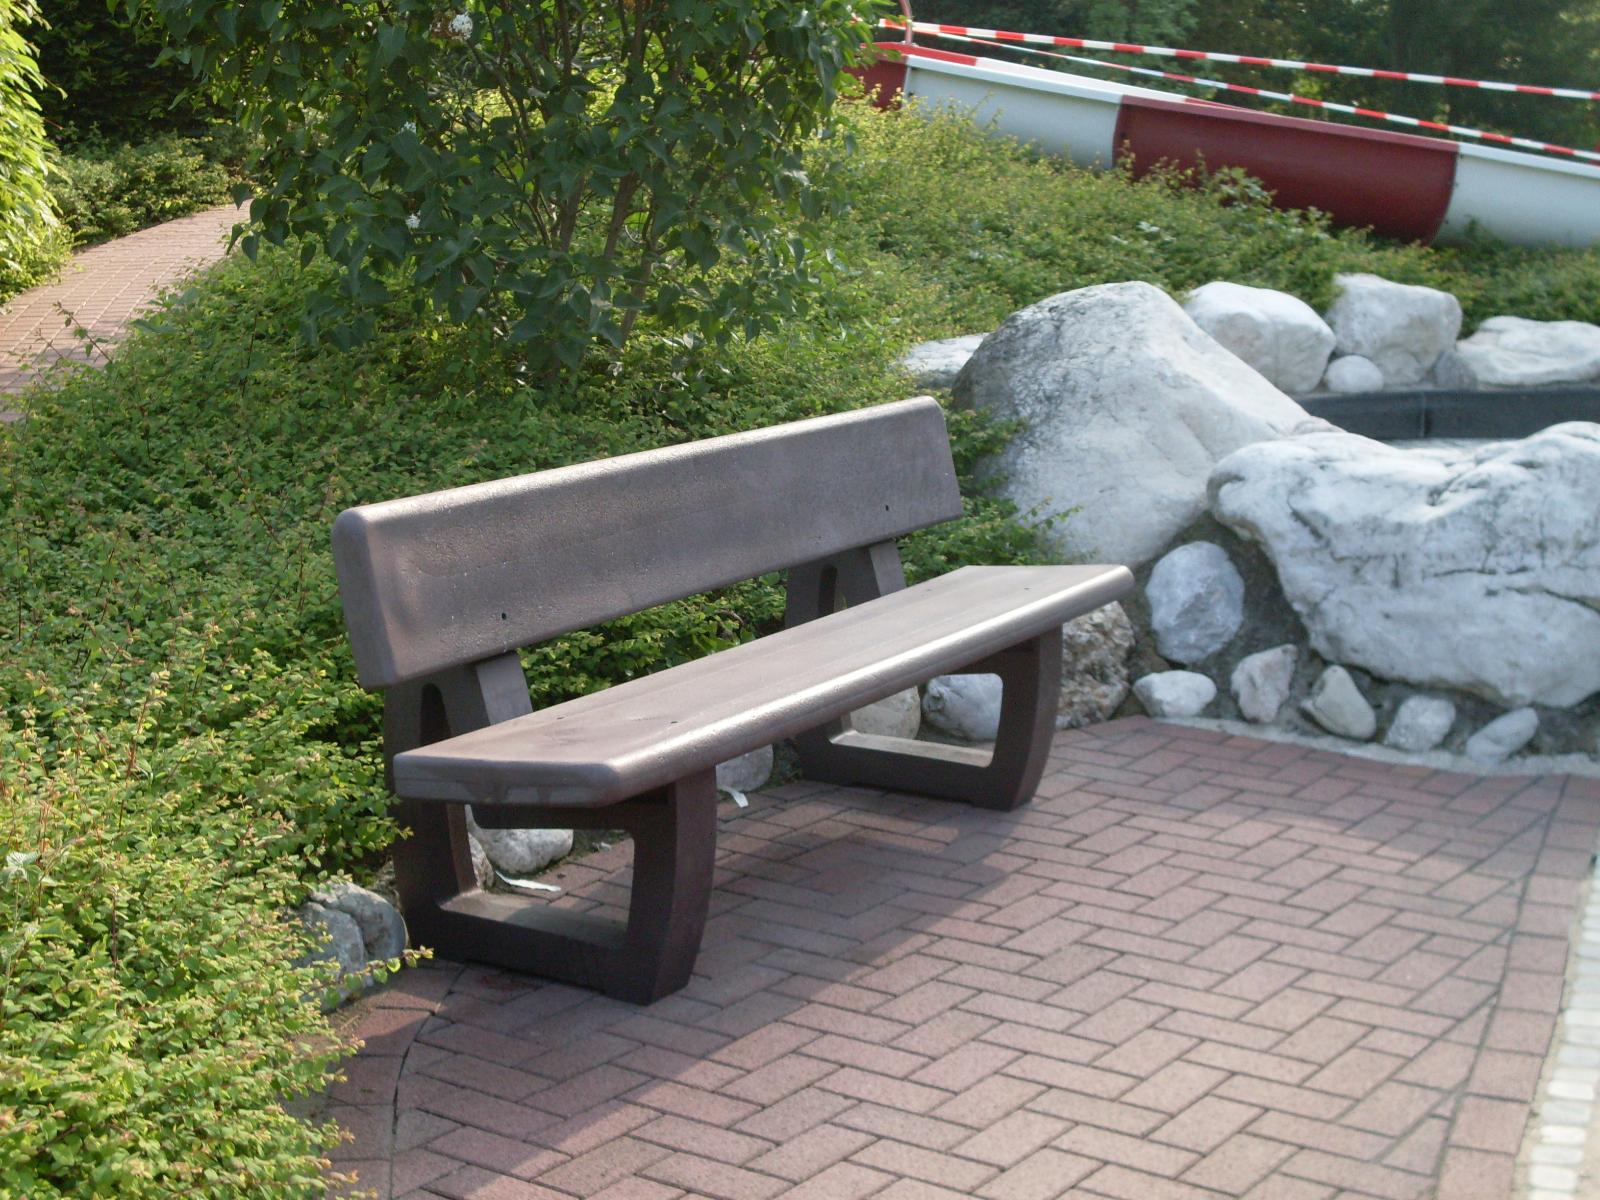 Bavaria bench